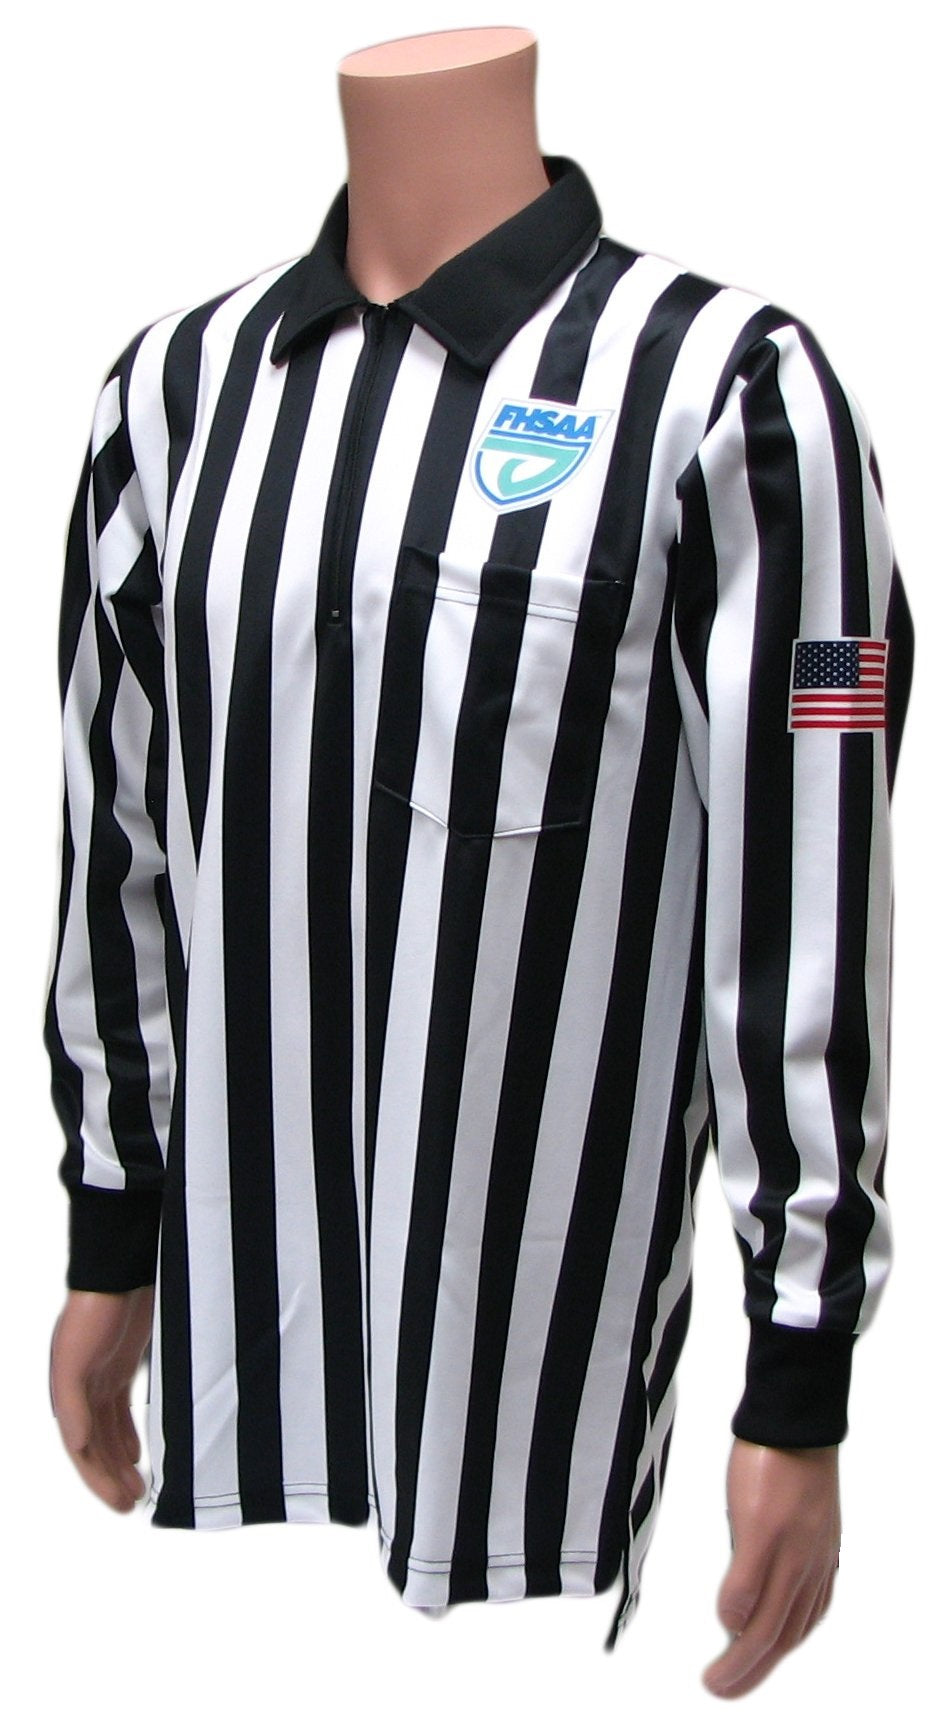 FHSAA 1 quot Stripe Long Sleeve Football Lacrosse Referee Shirt Gerry